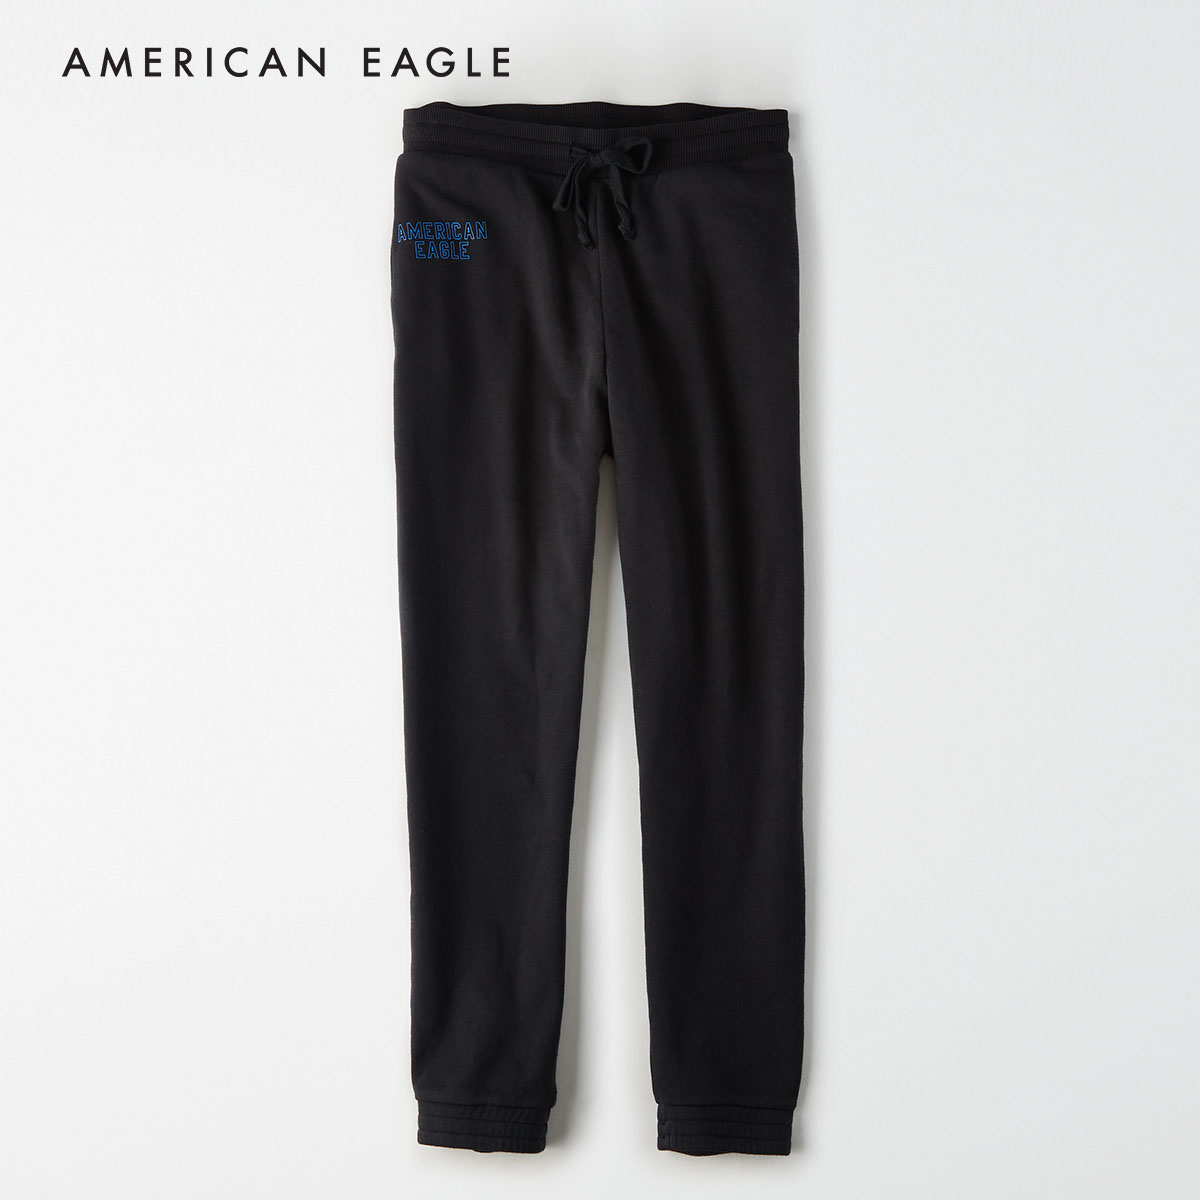 American Eagle Graphic Fleece Jogger กางเกง ผู้หญิง จ็อกเกอร์ กราฟฟิค(032-4028-001)